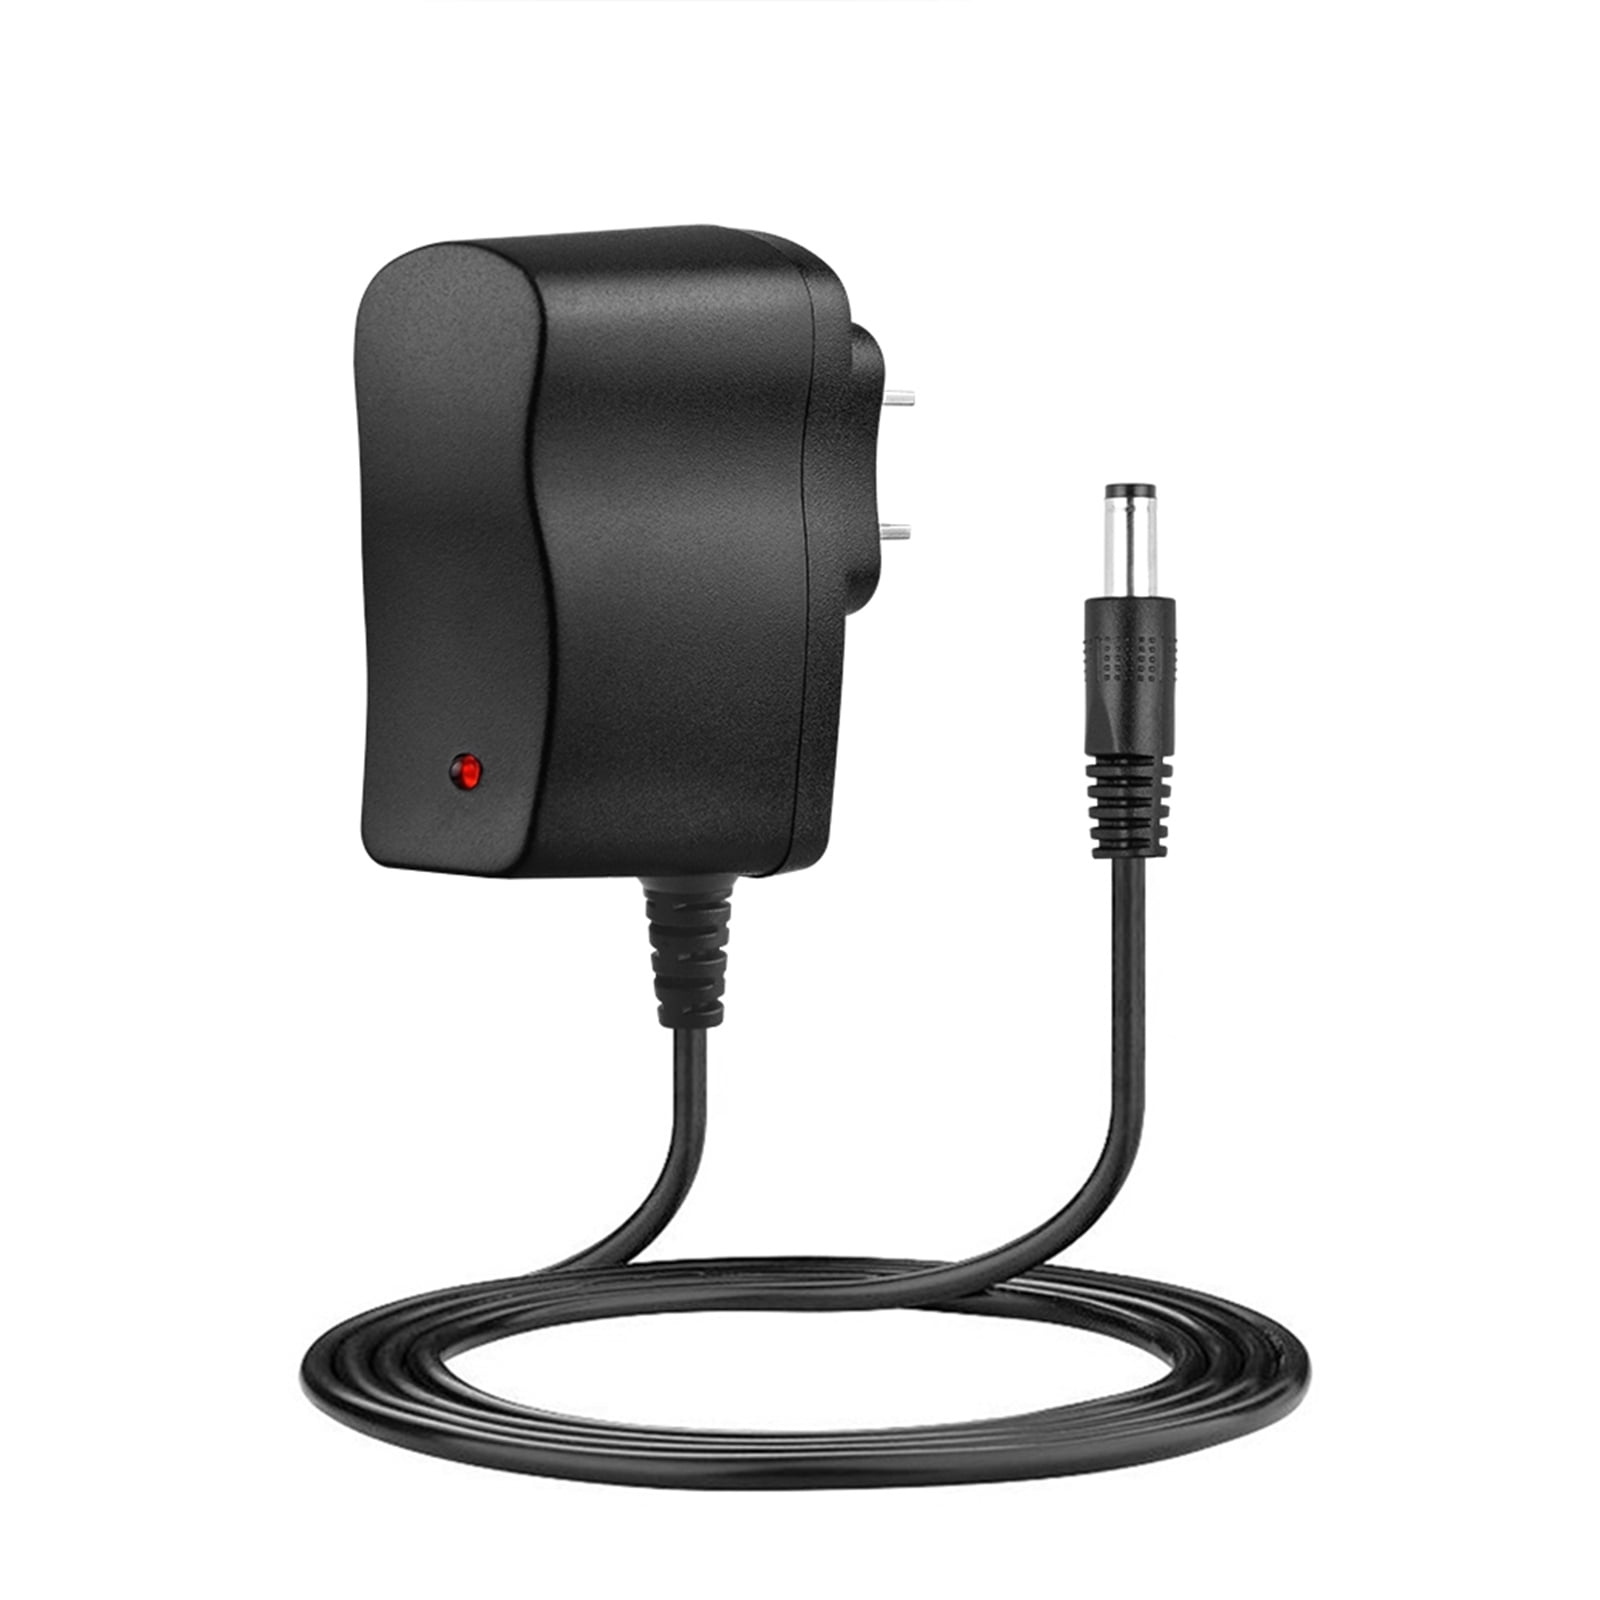 USB 5v Ladegerät POWER Kabel kompatibel zu Motorola mbp30 Babyphone 